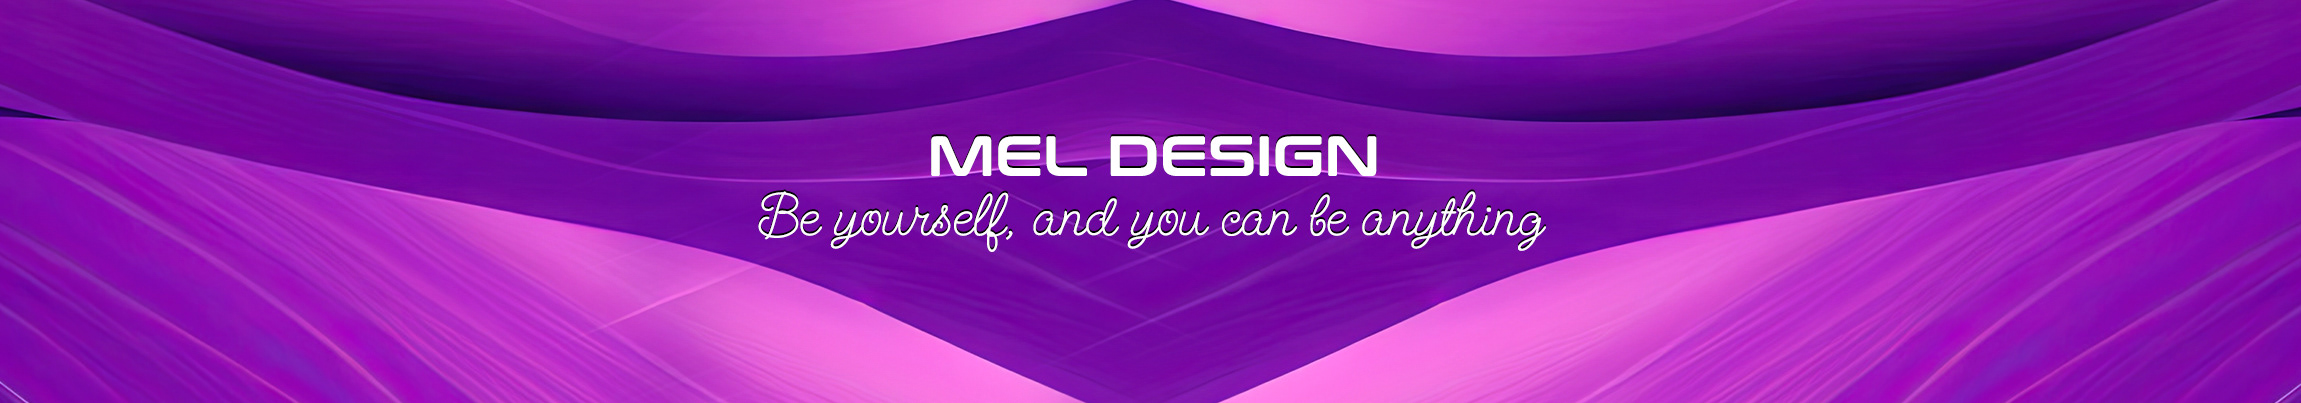 Mel Design's profile banner